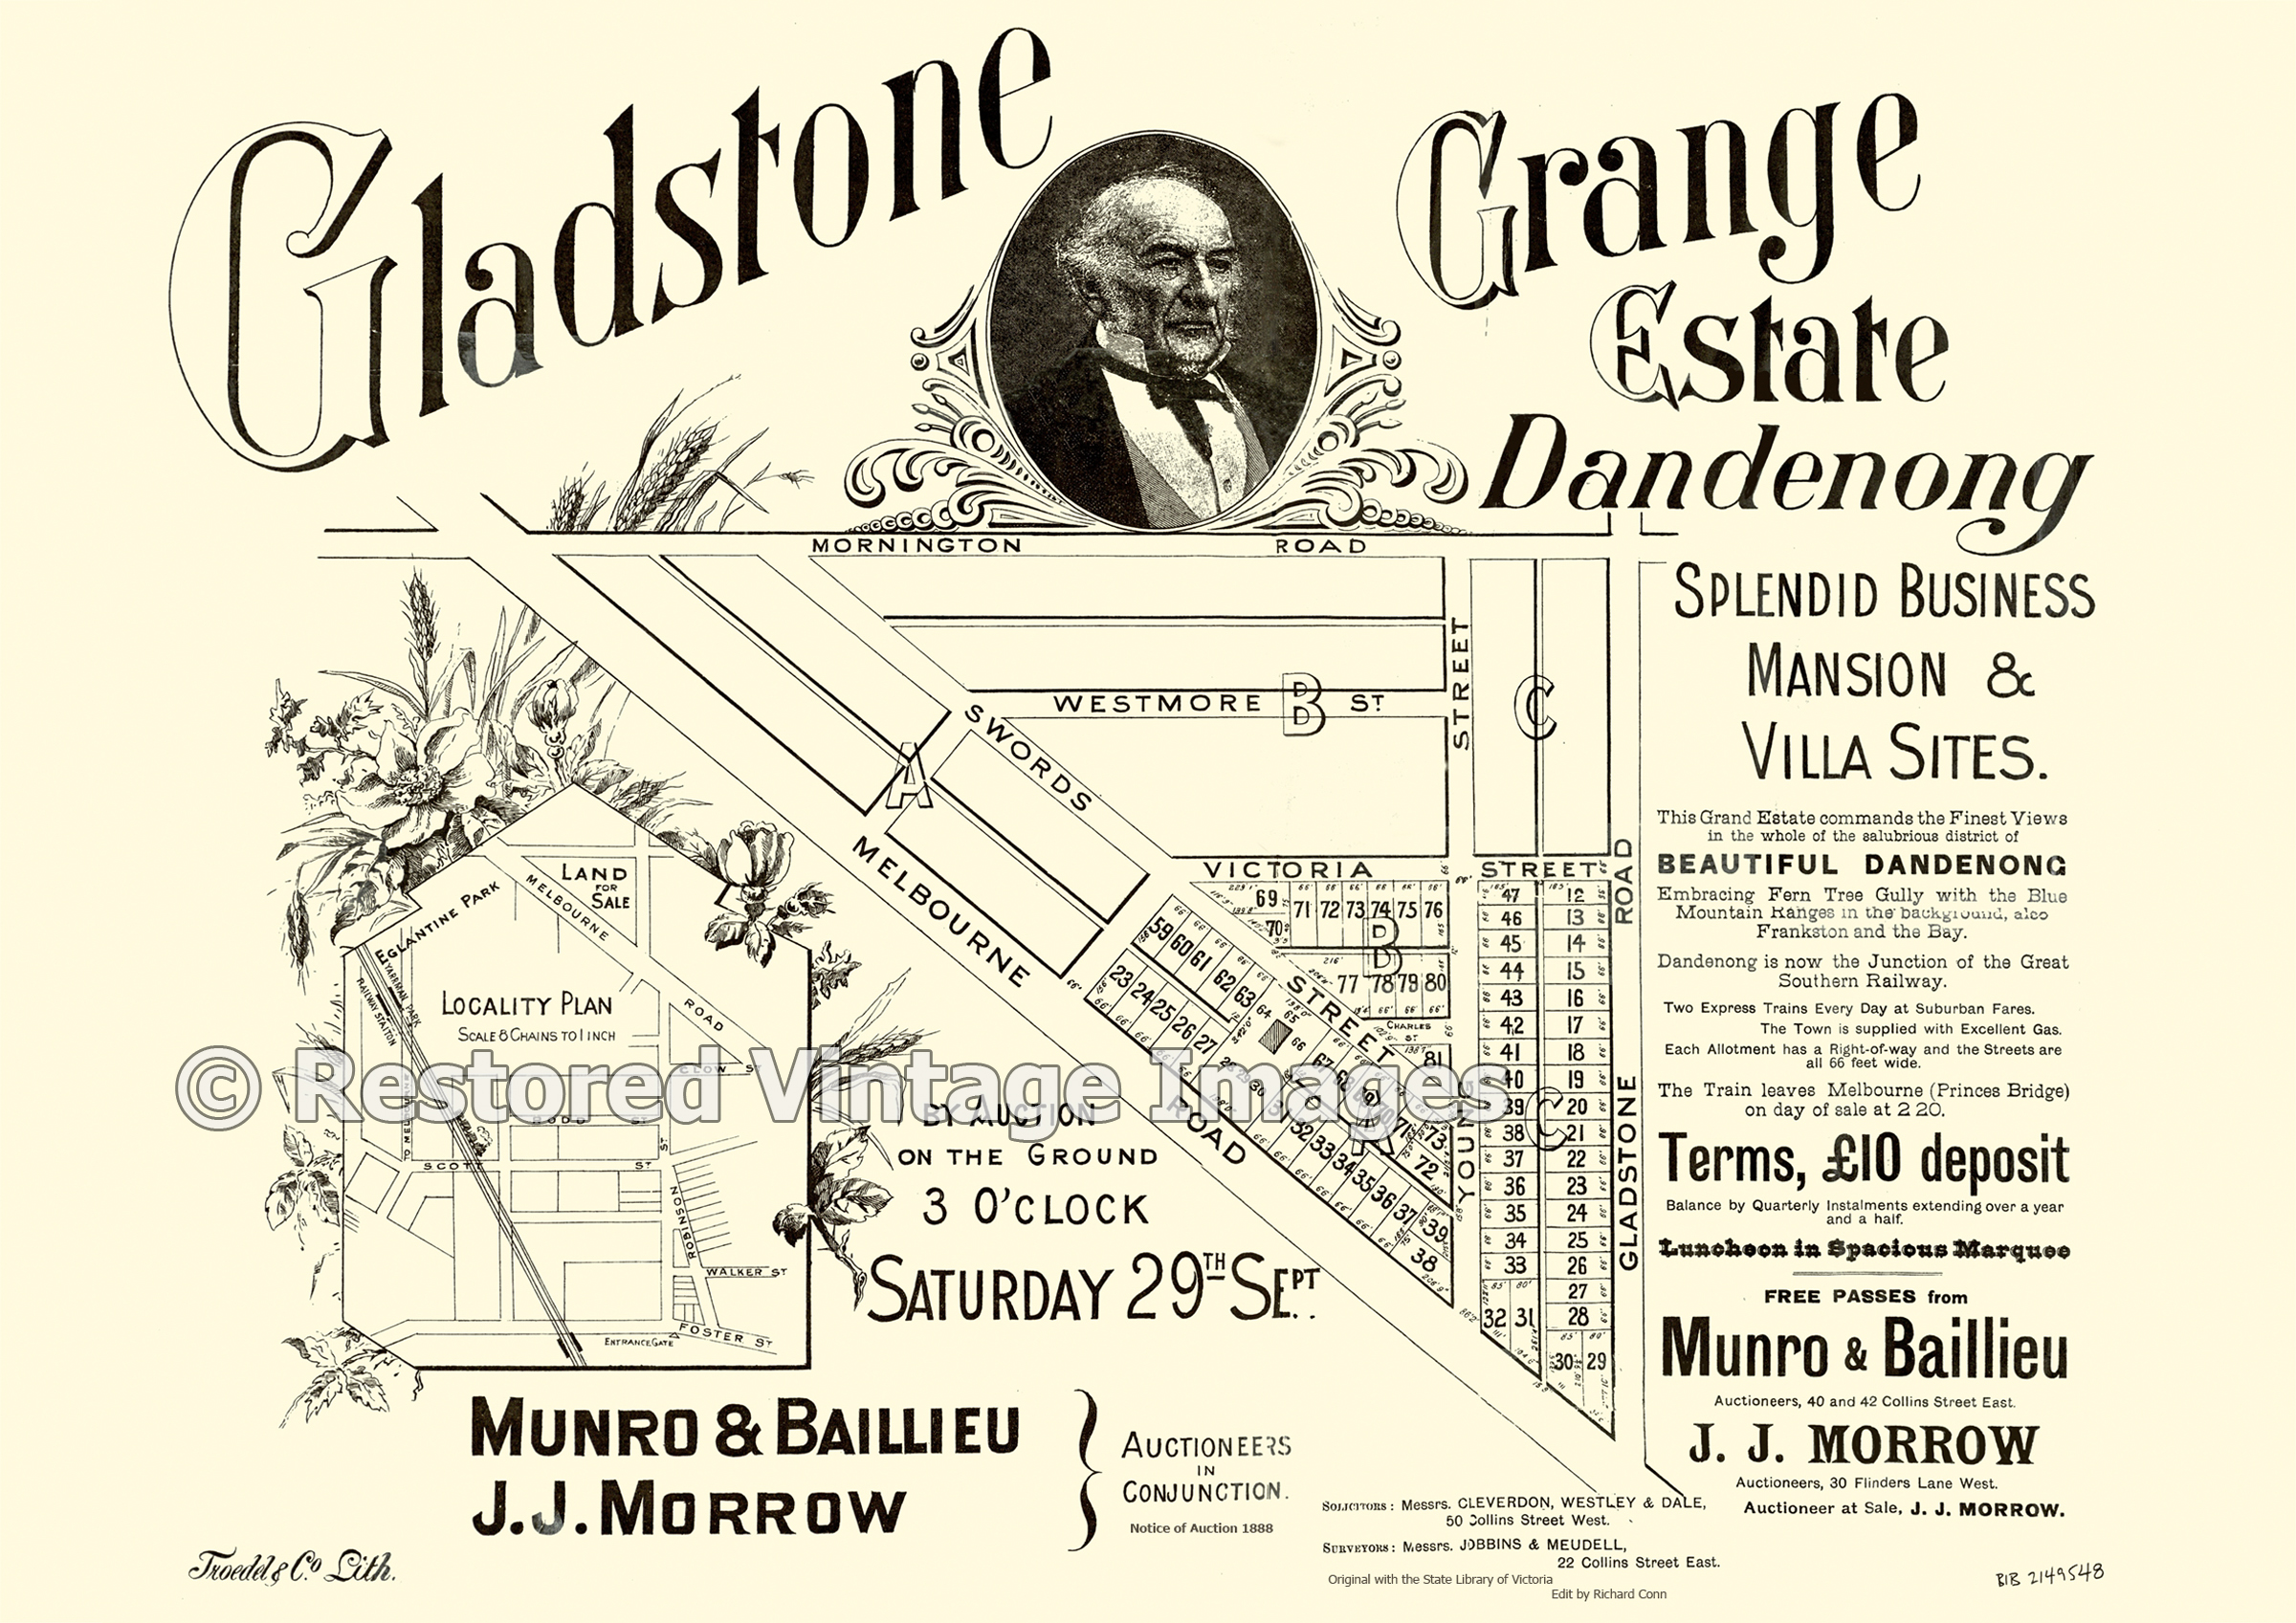 Gladstone Grange Estate 1888 – Dandenong